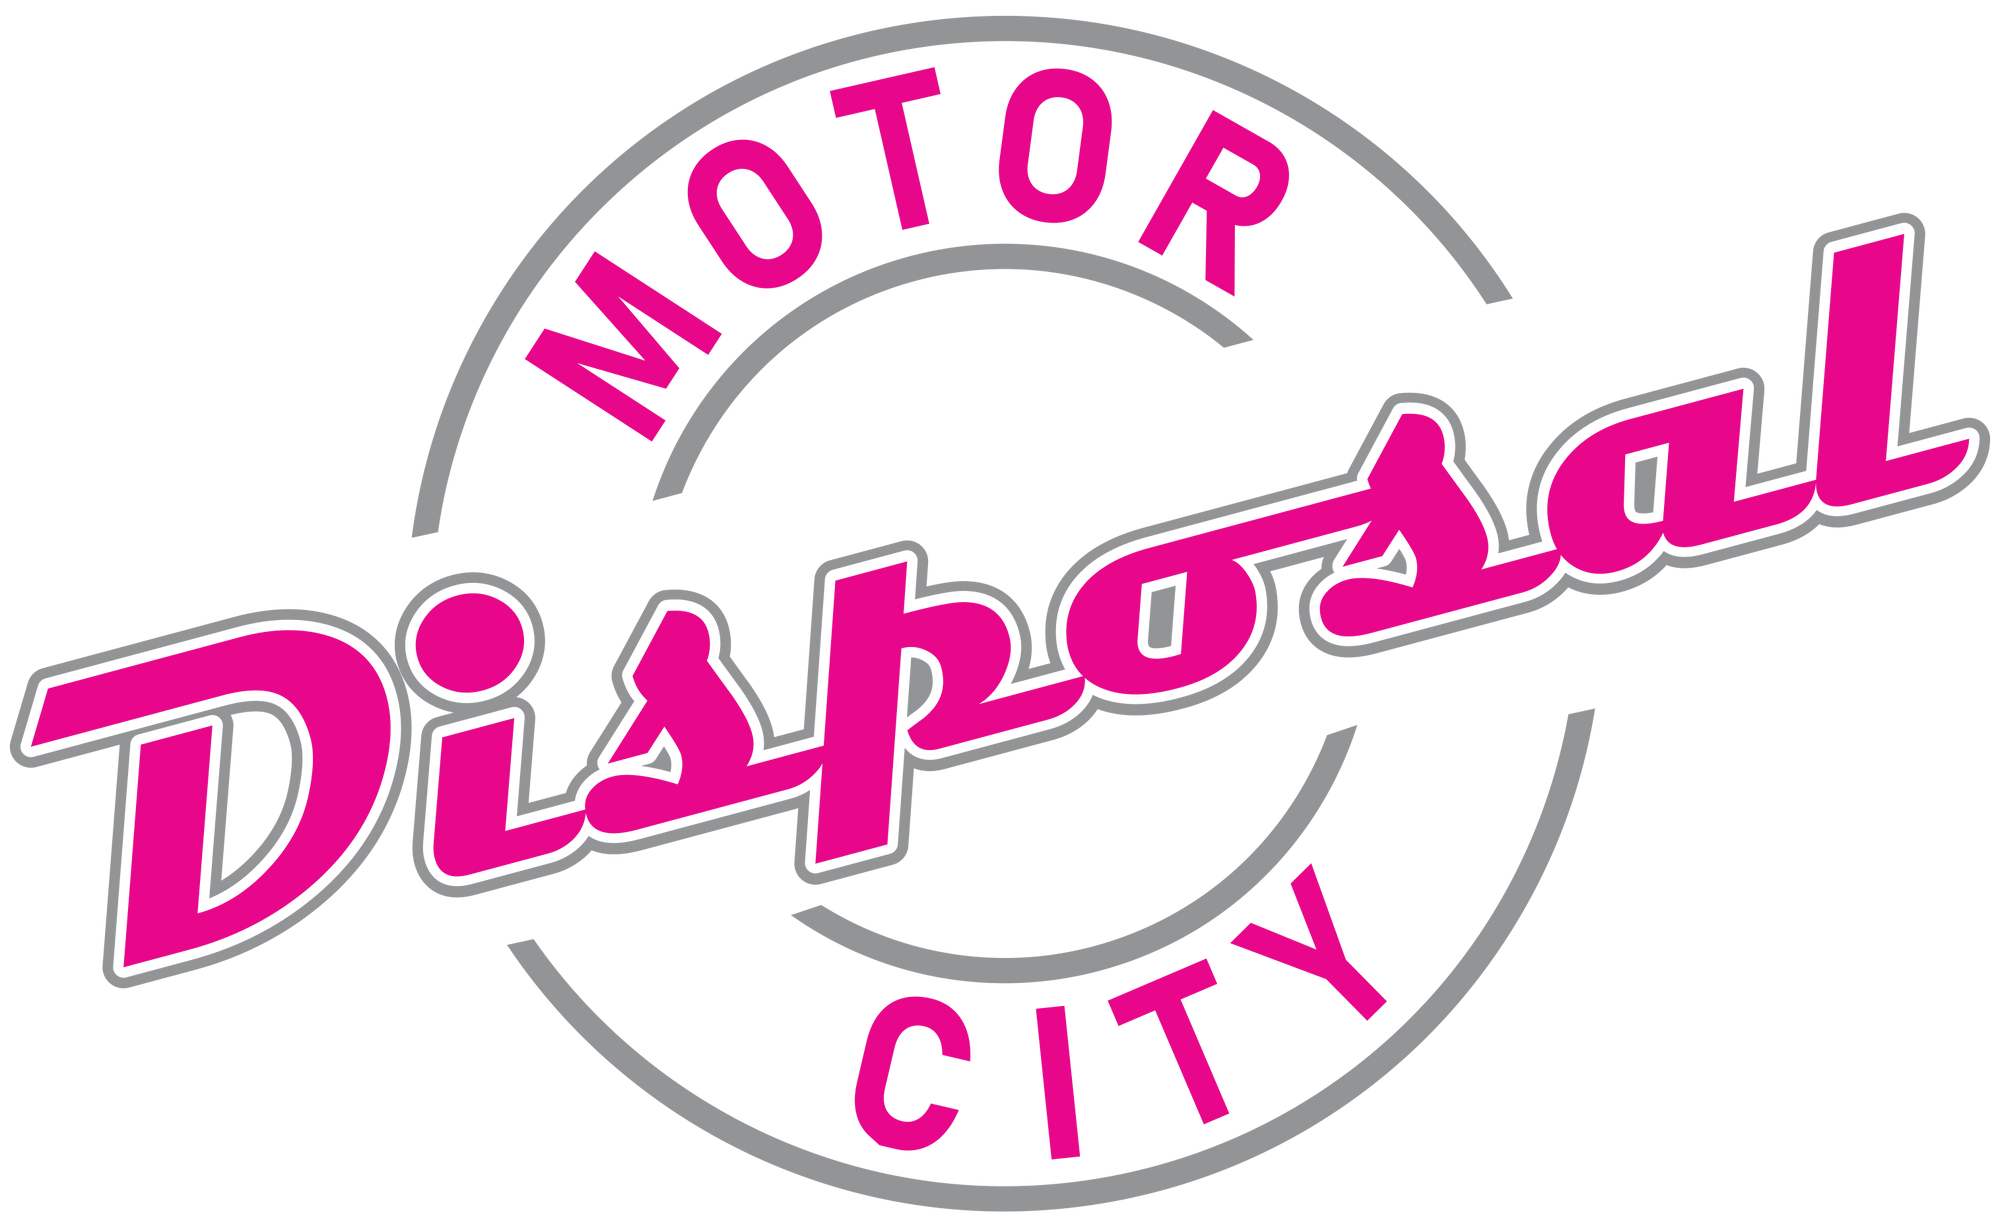 Motor City Disposal